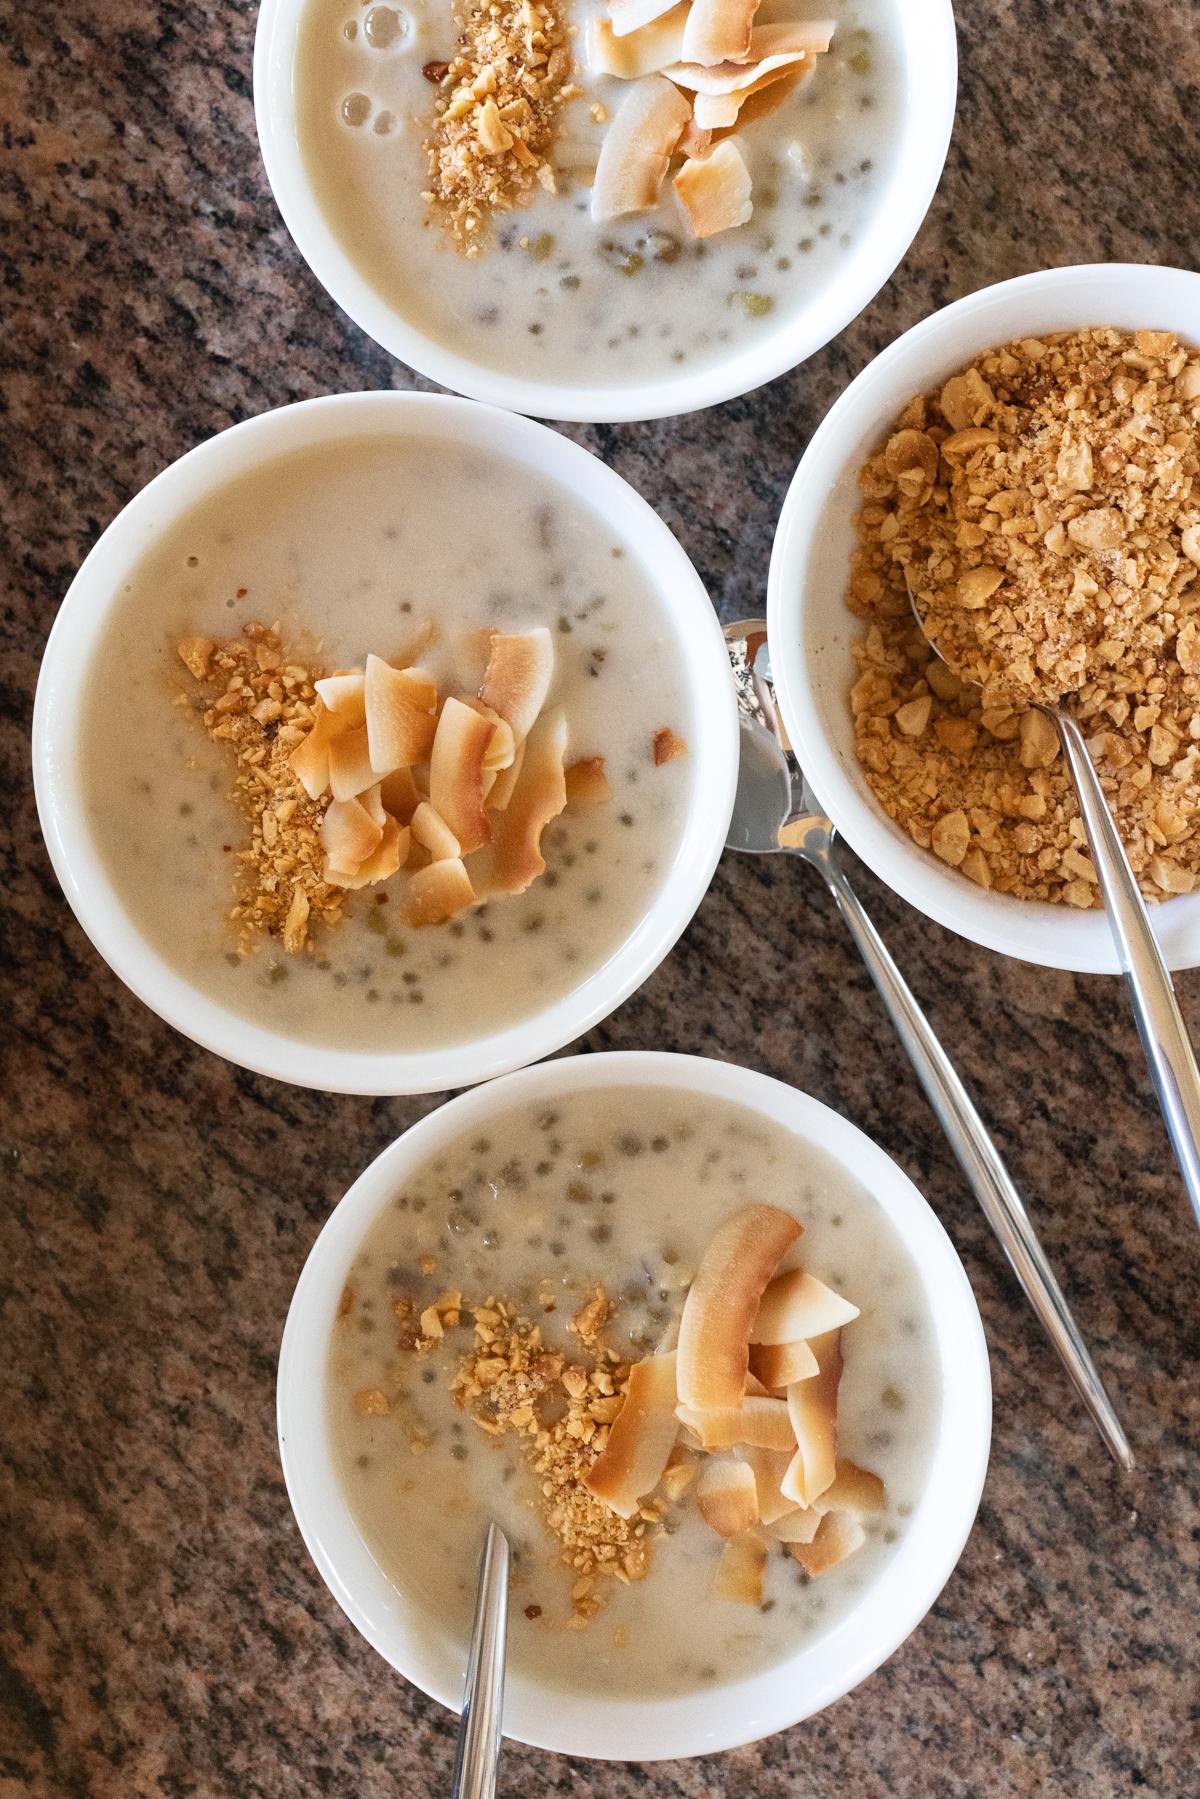 Vietnamese Mung Bean Dessert (Che Dau Xanh) spooned into individual dessert bowls